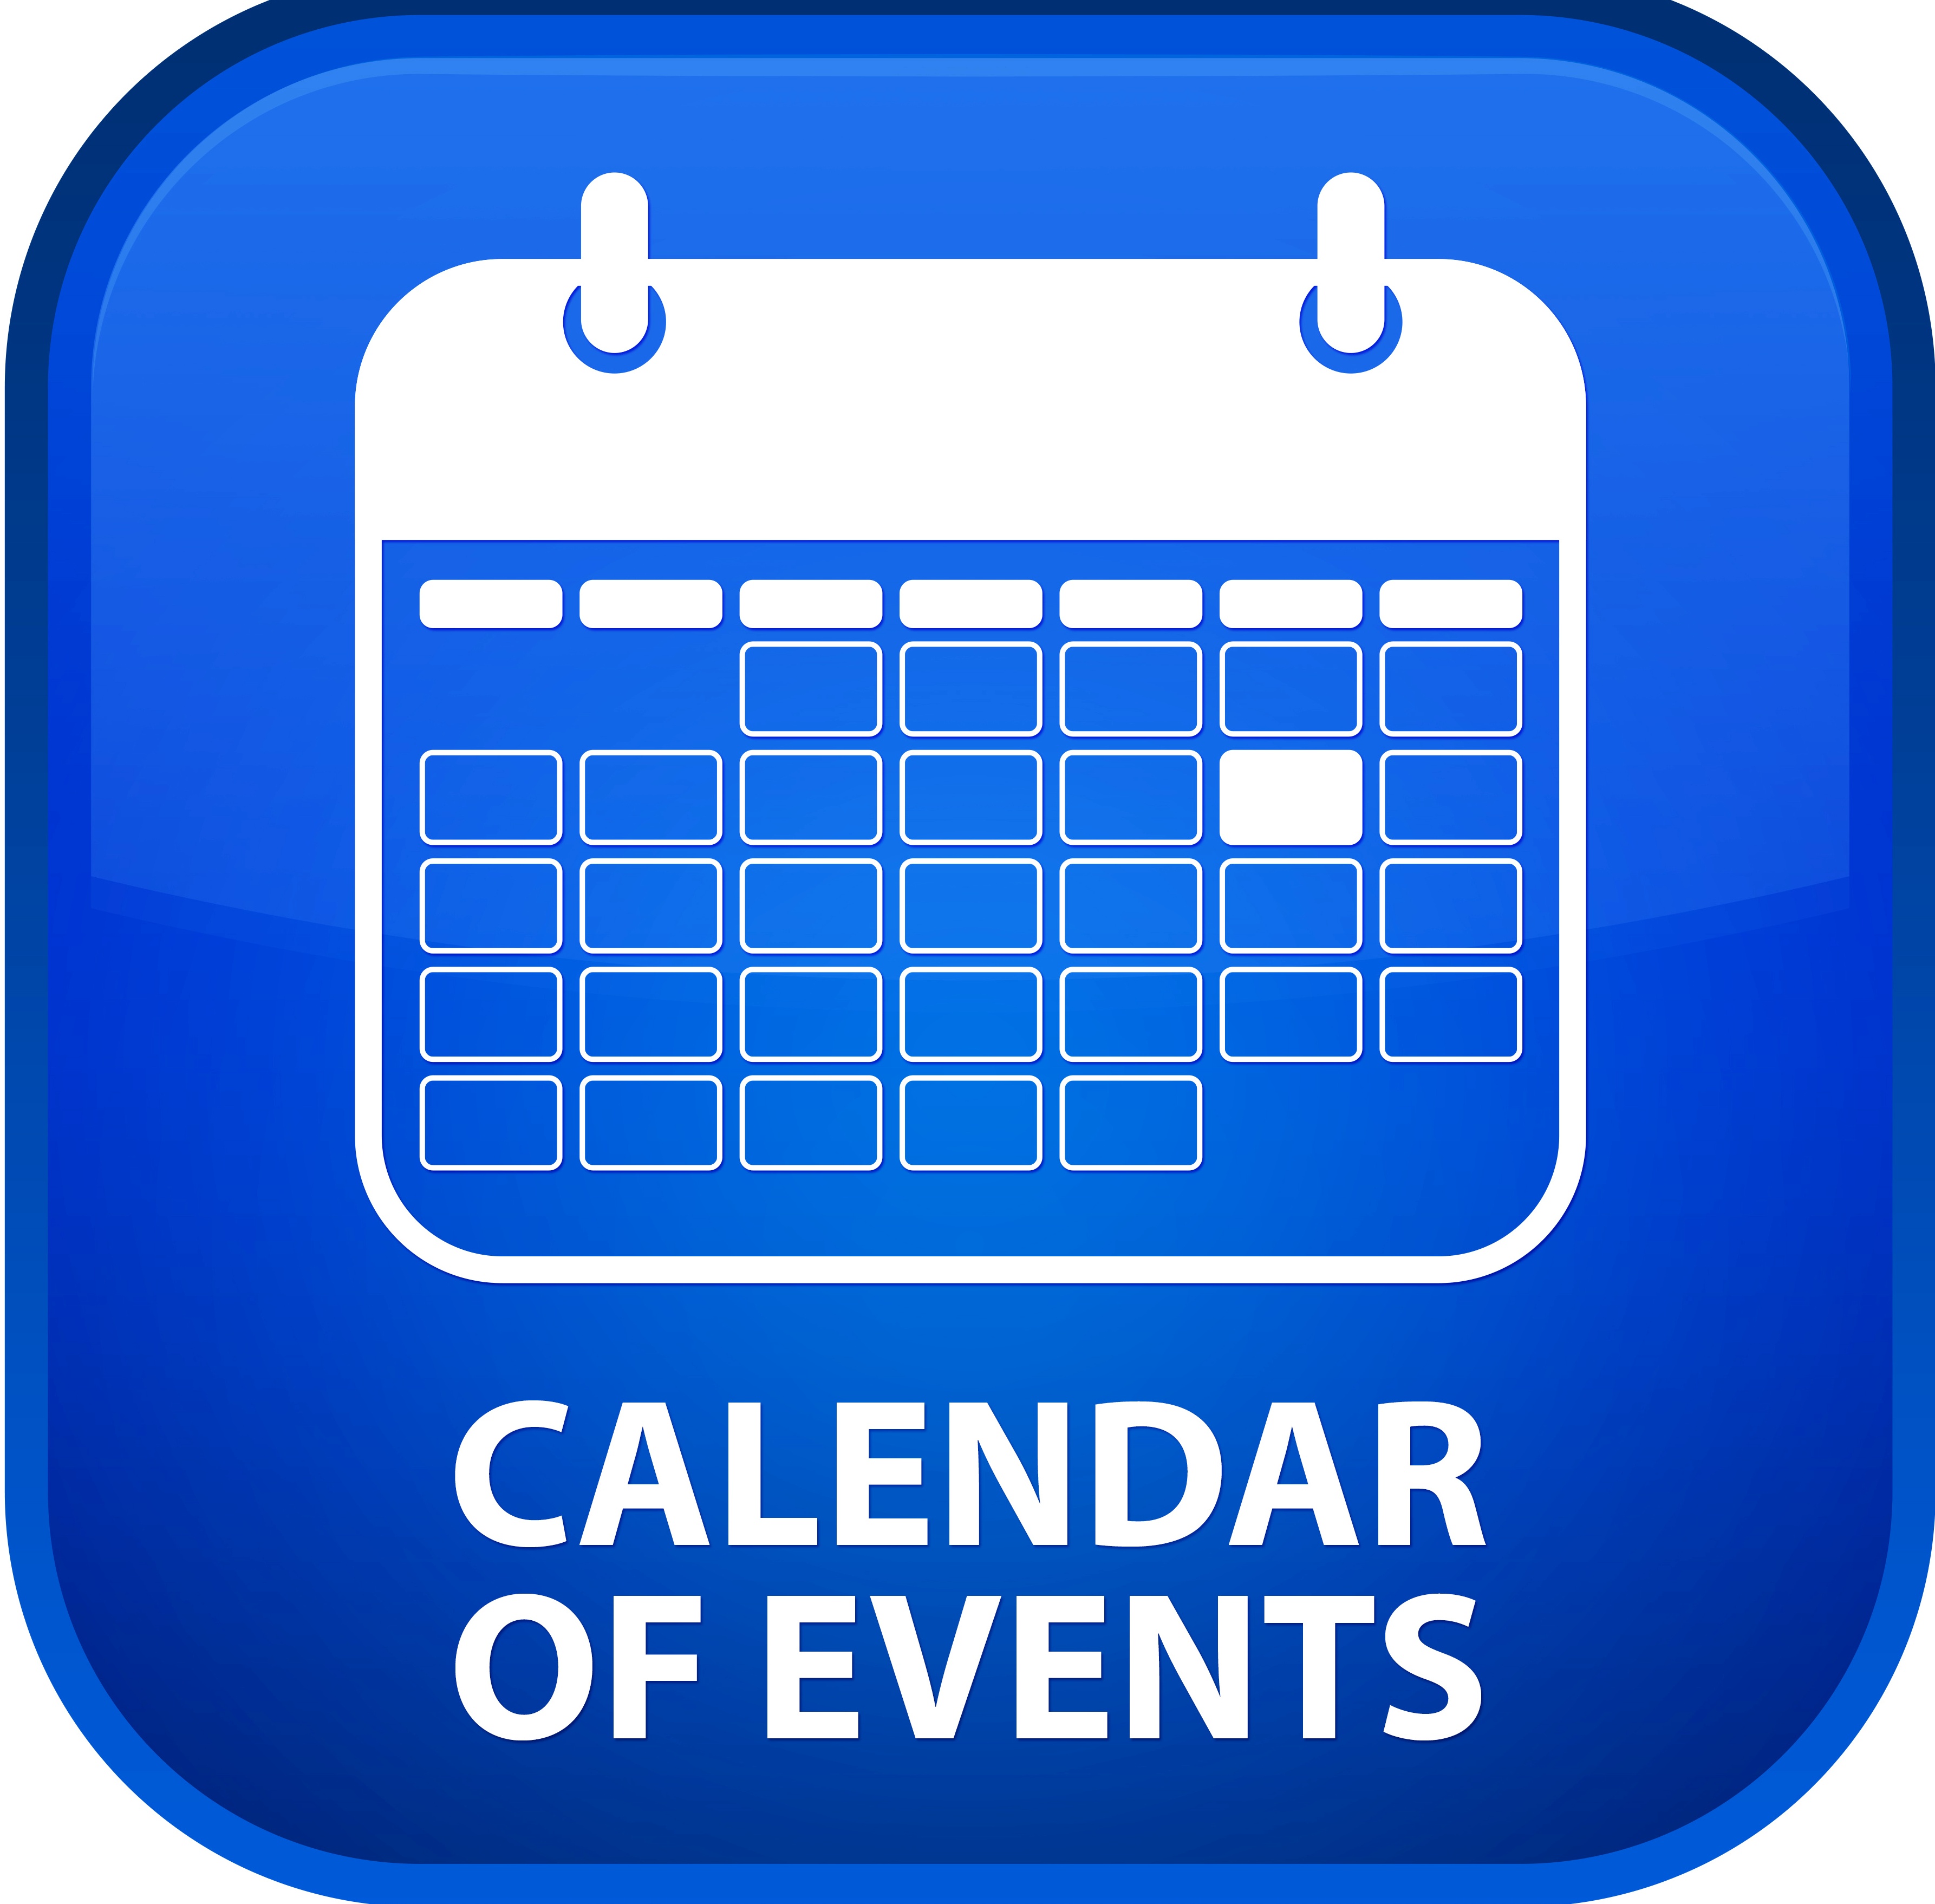 Calendar of events blue square button